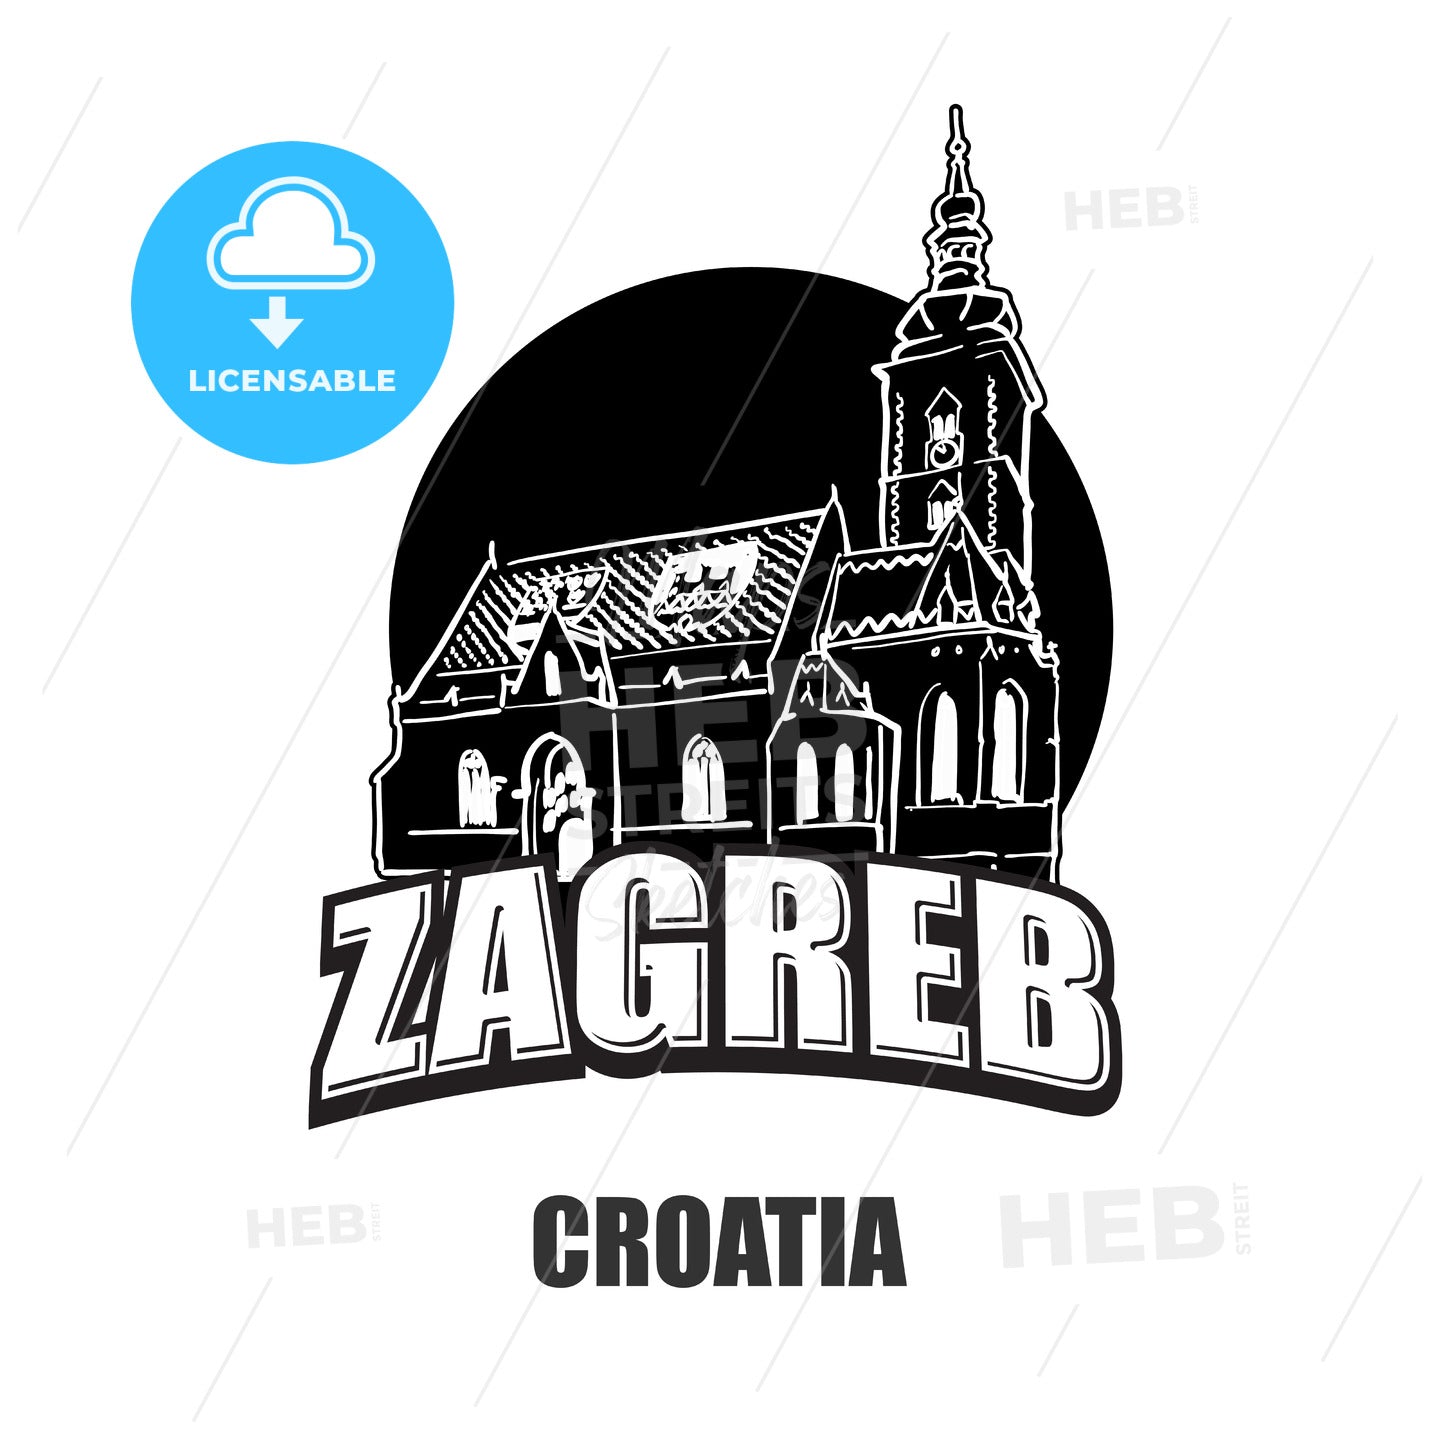 Zagreb, Croatia, black and white logo – instant download